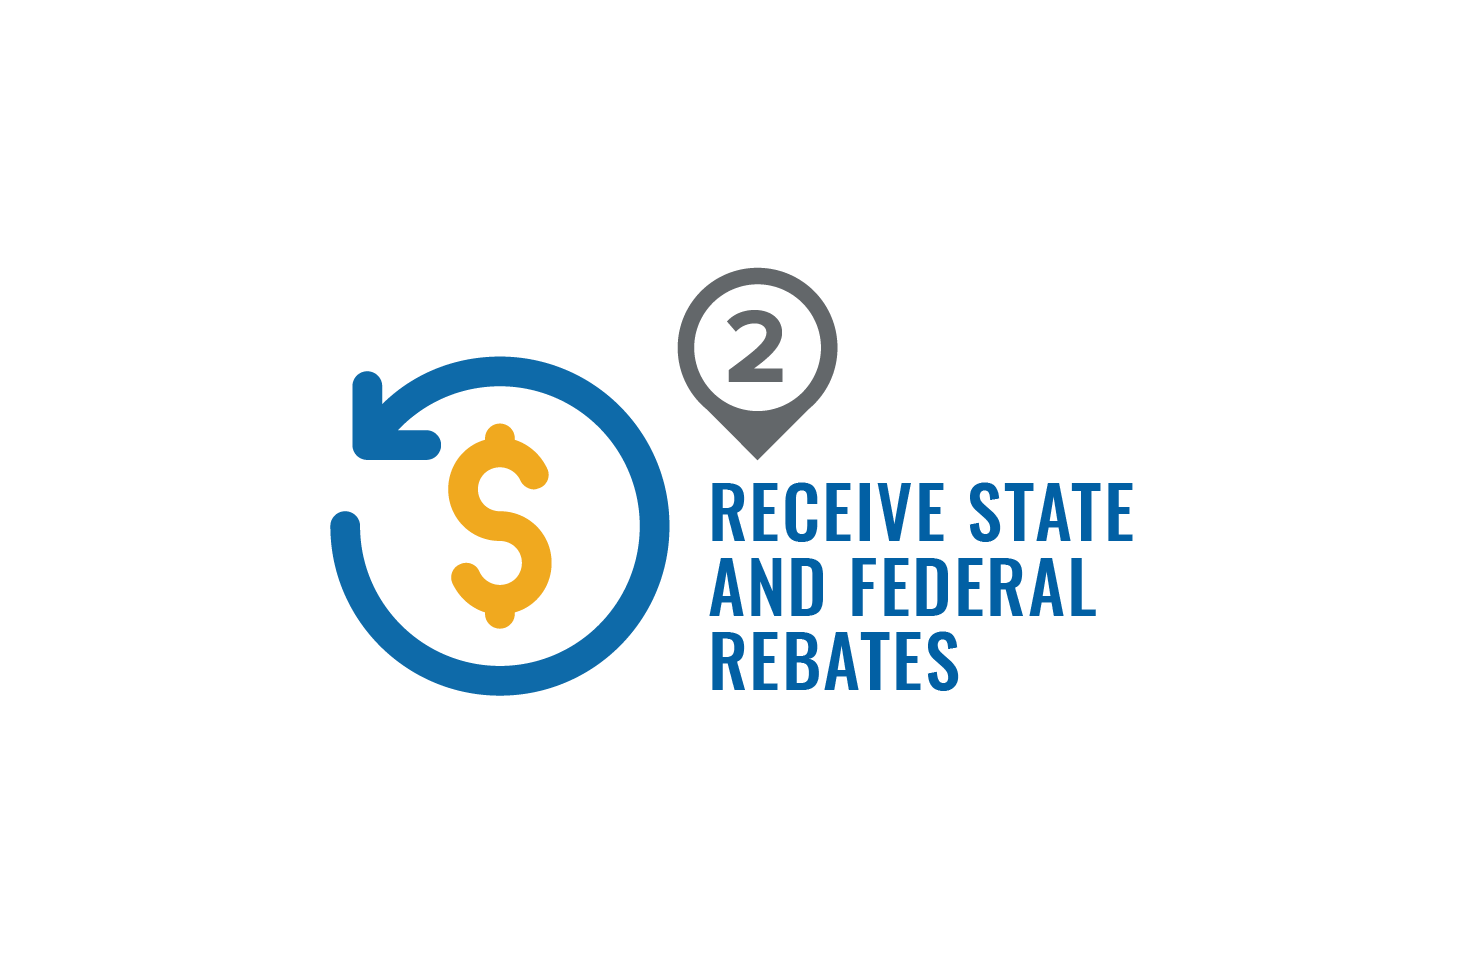 Step 2 - Receive State and Federal Rebates